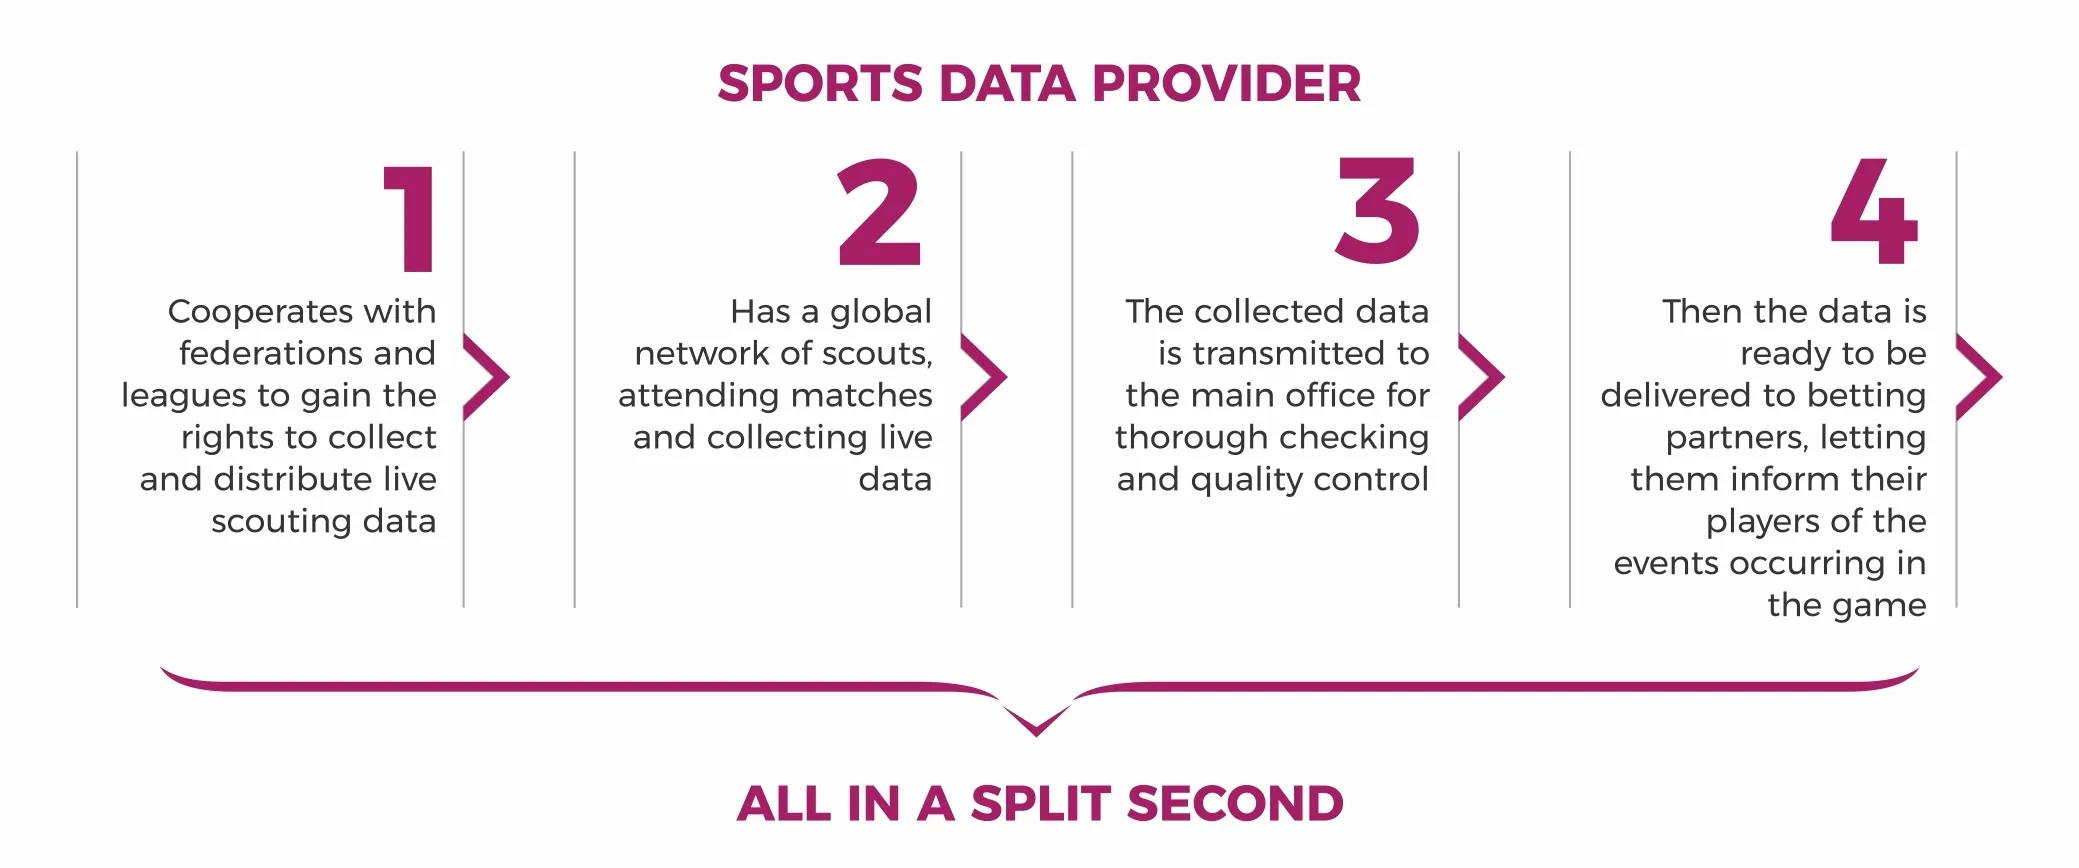 Sports Data Provider Explained